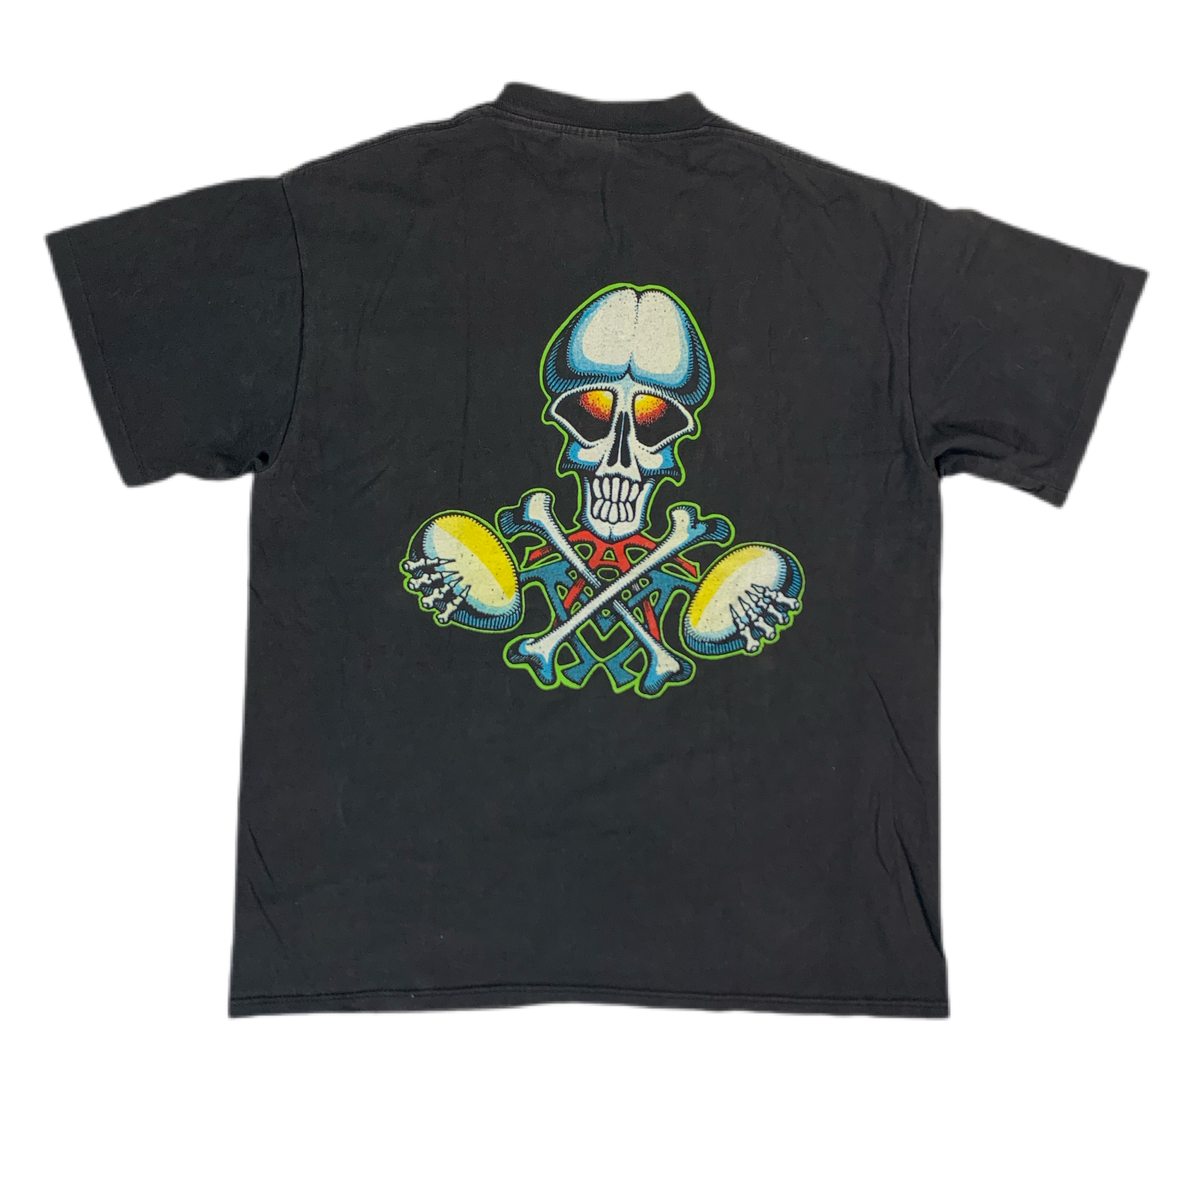 Vintage Grateful Dead “Aoxomoxoa“ T-Shirt - jointcustodydc